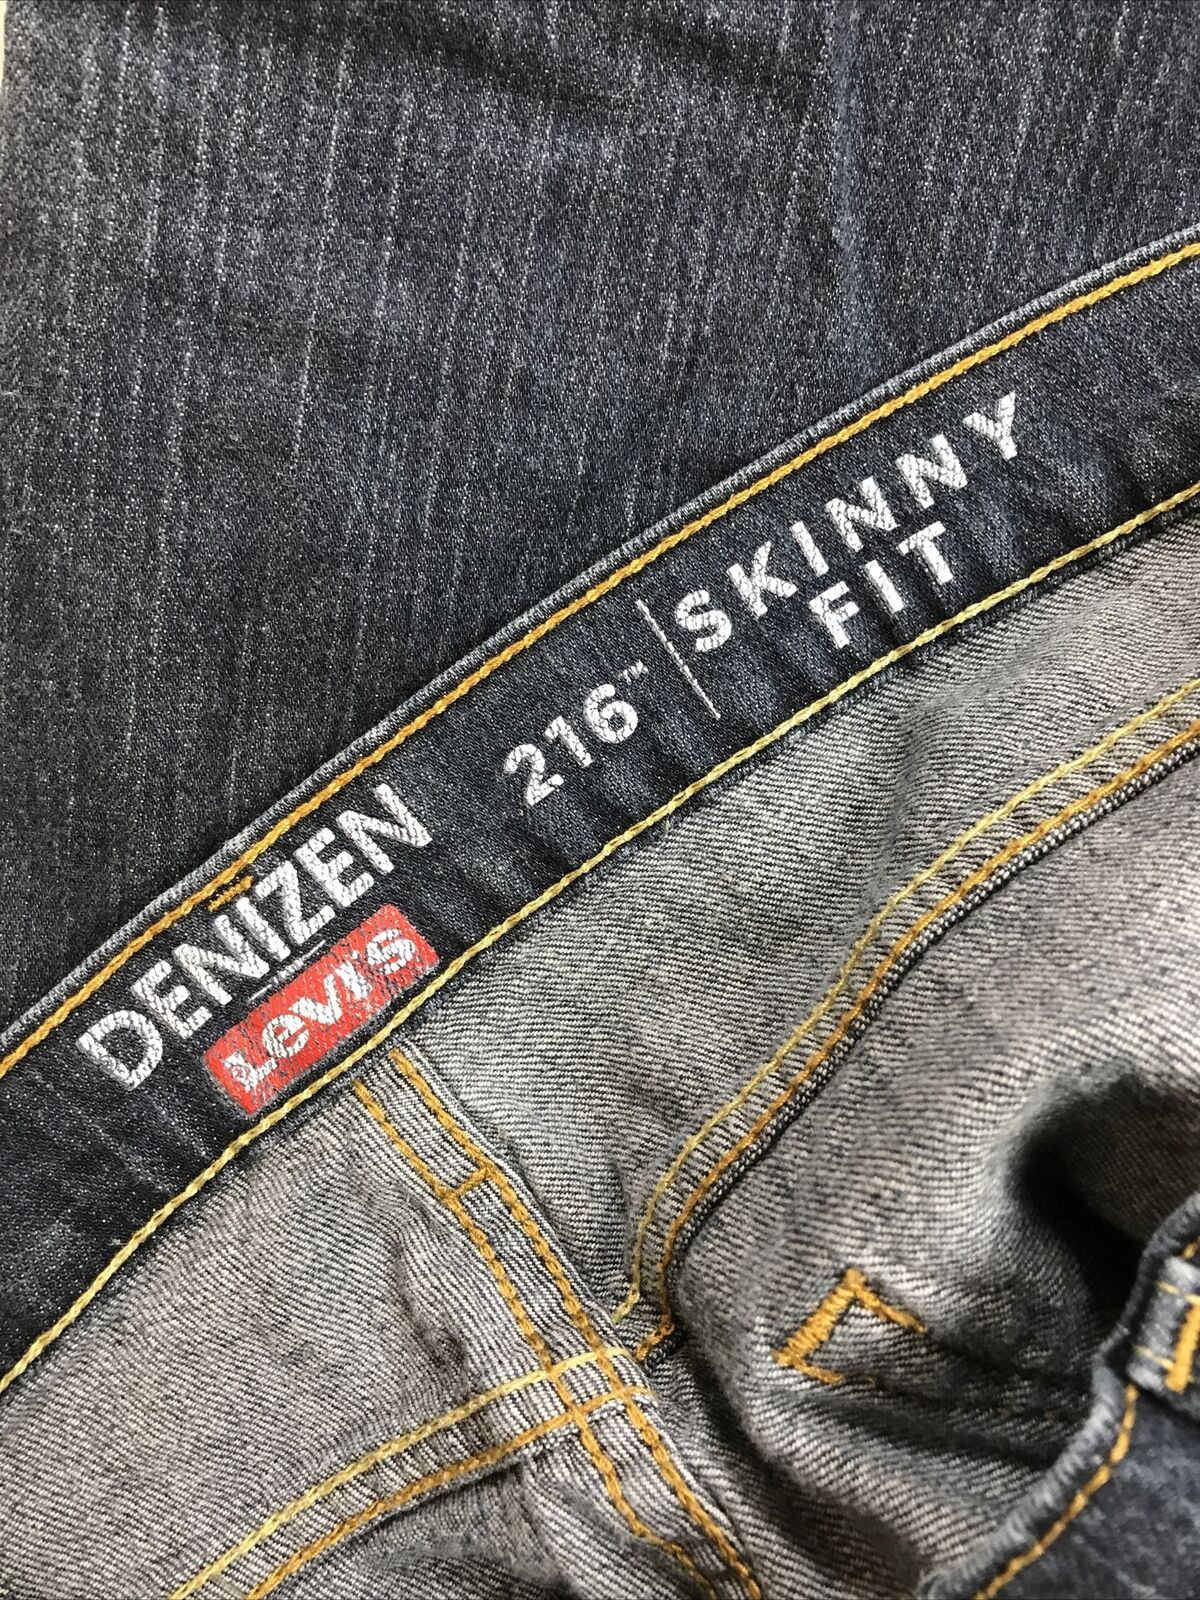 Levi's Denizen Men's Dark Wash Denim 216 Skinny Fit Jeans - 36x32